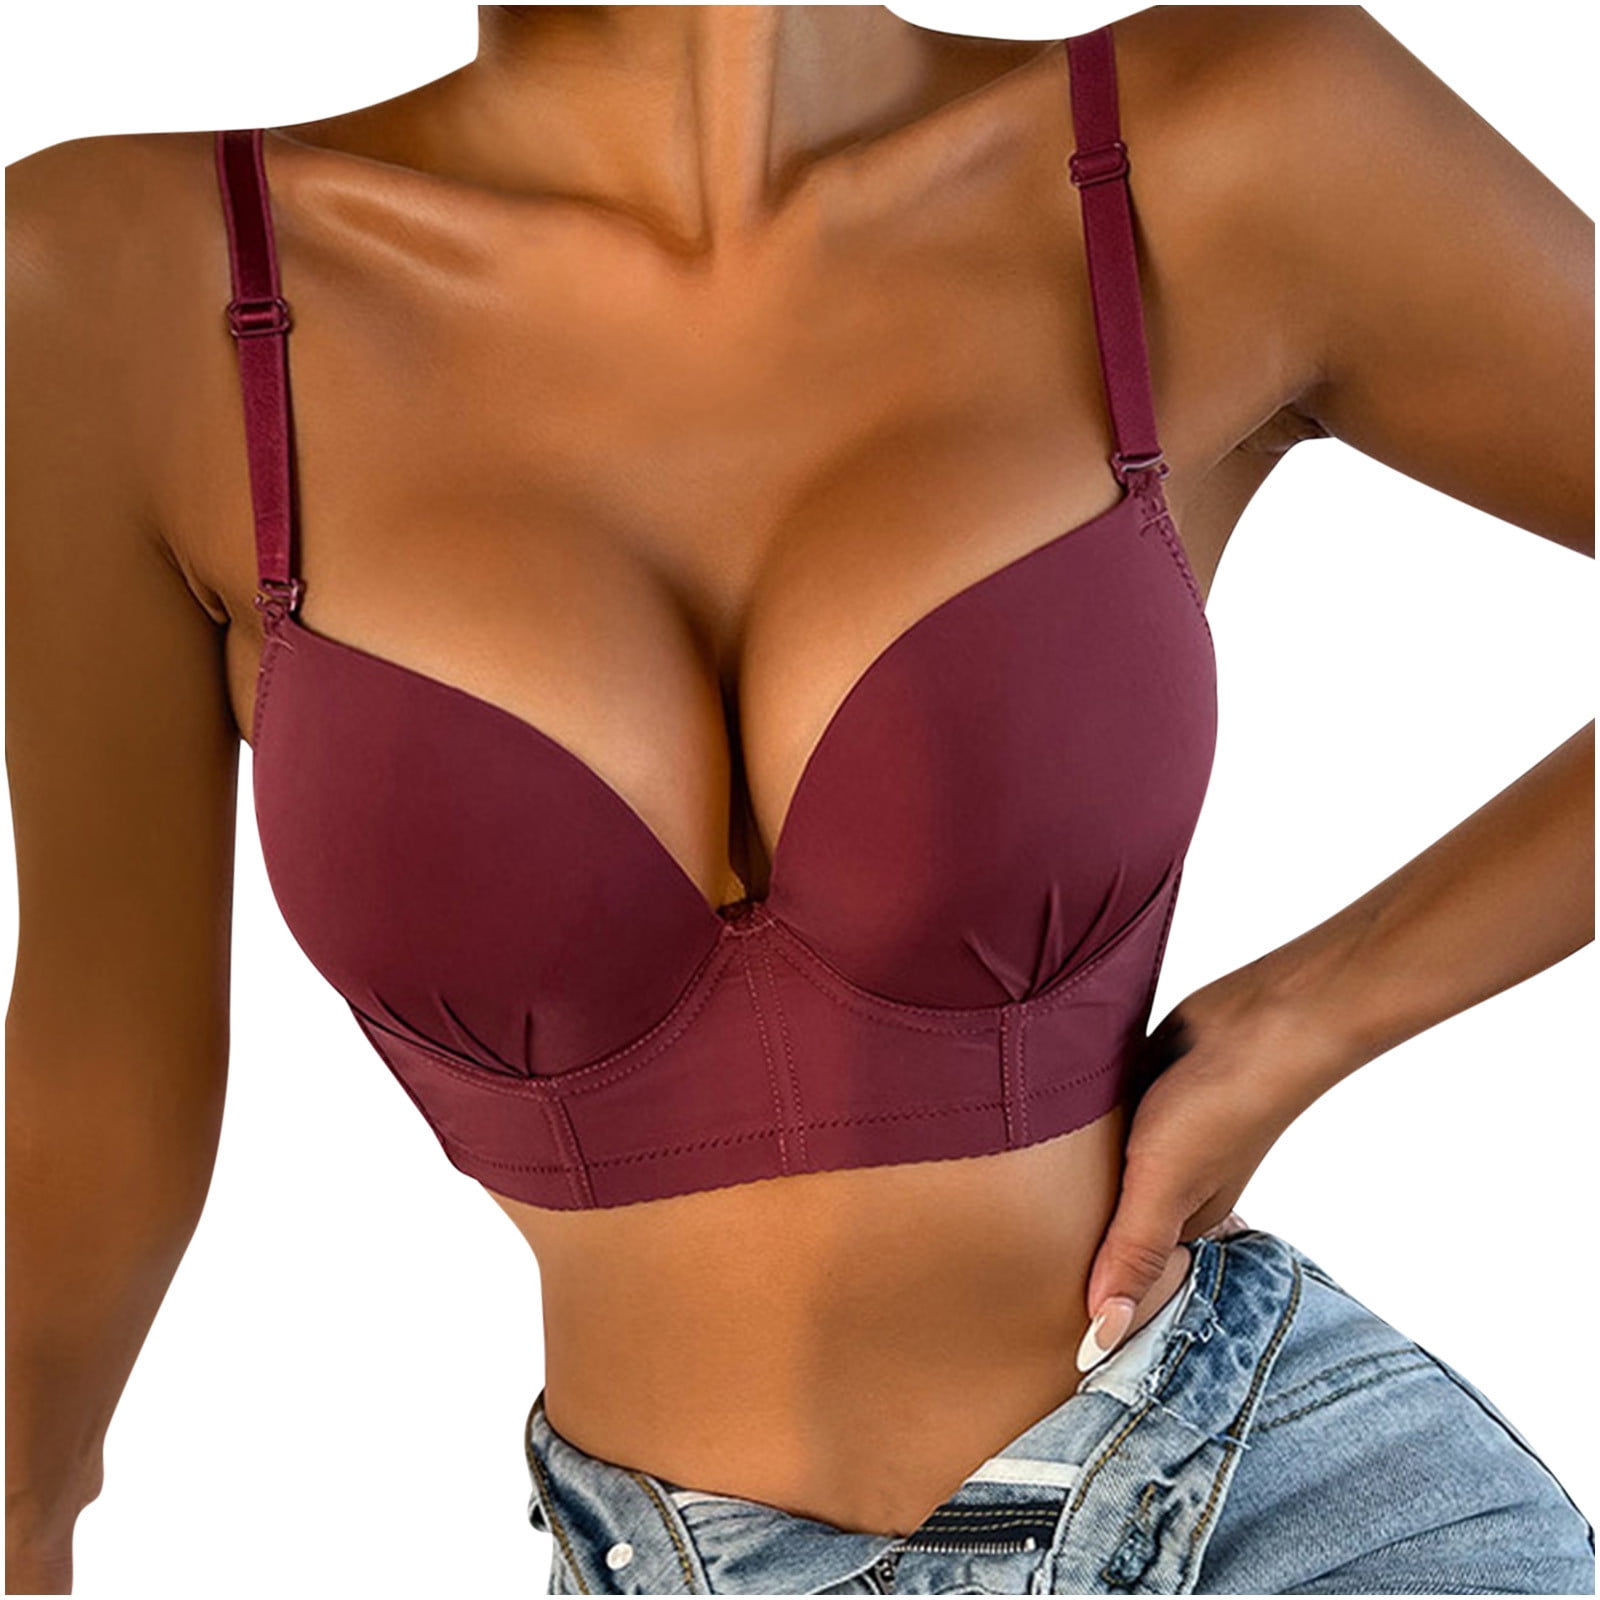 JGGSPWM Woman Sexy Breast-receiving Bra Without Steel Rings Sexy Vest  Lingerie Underwear Wine L 